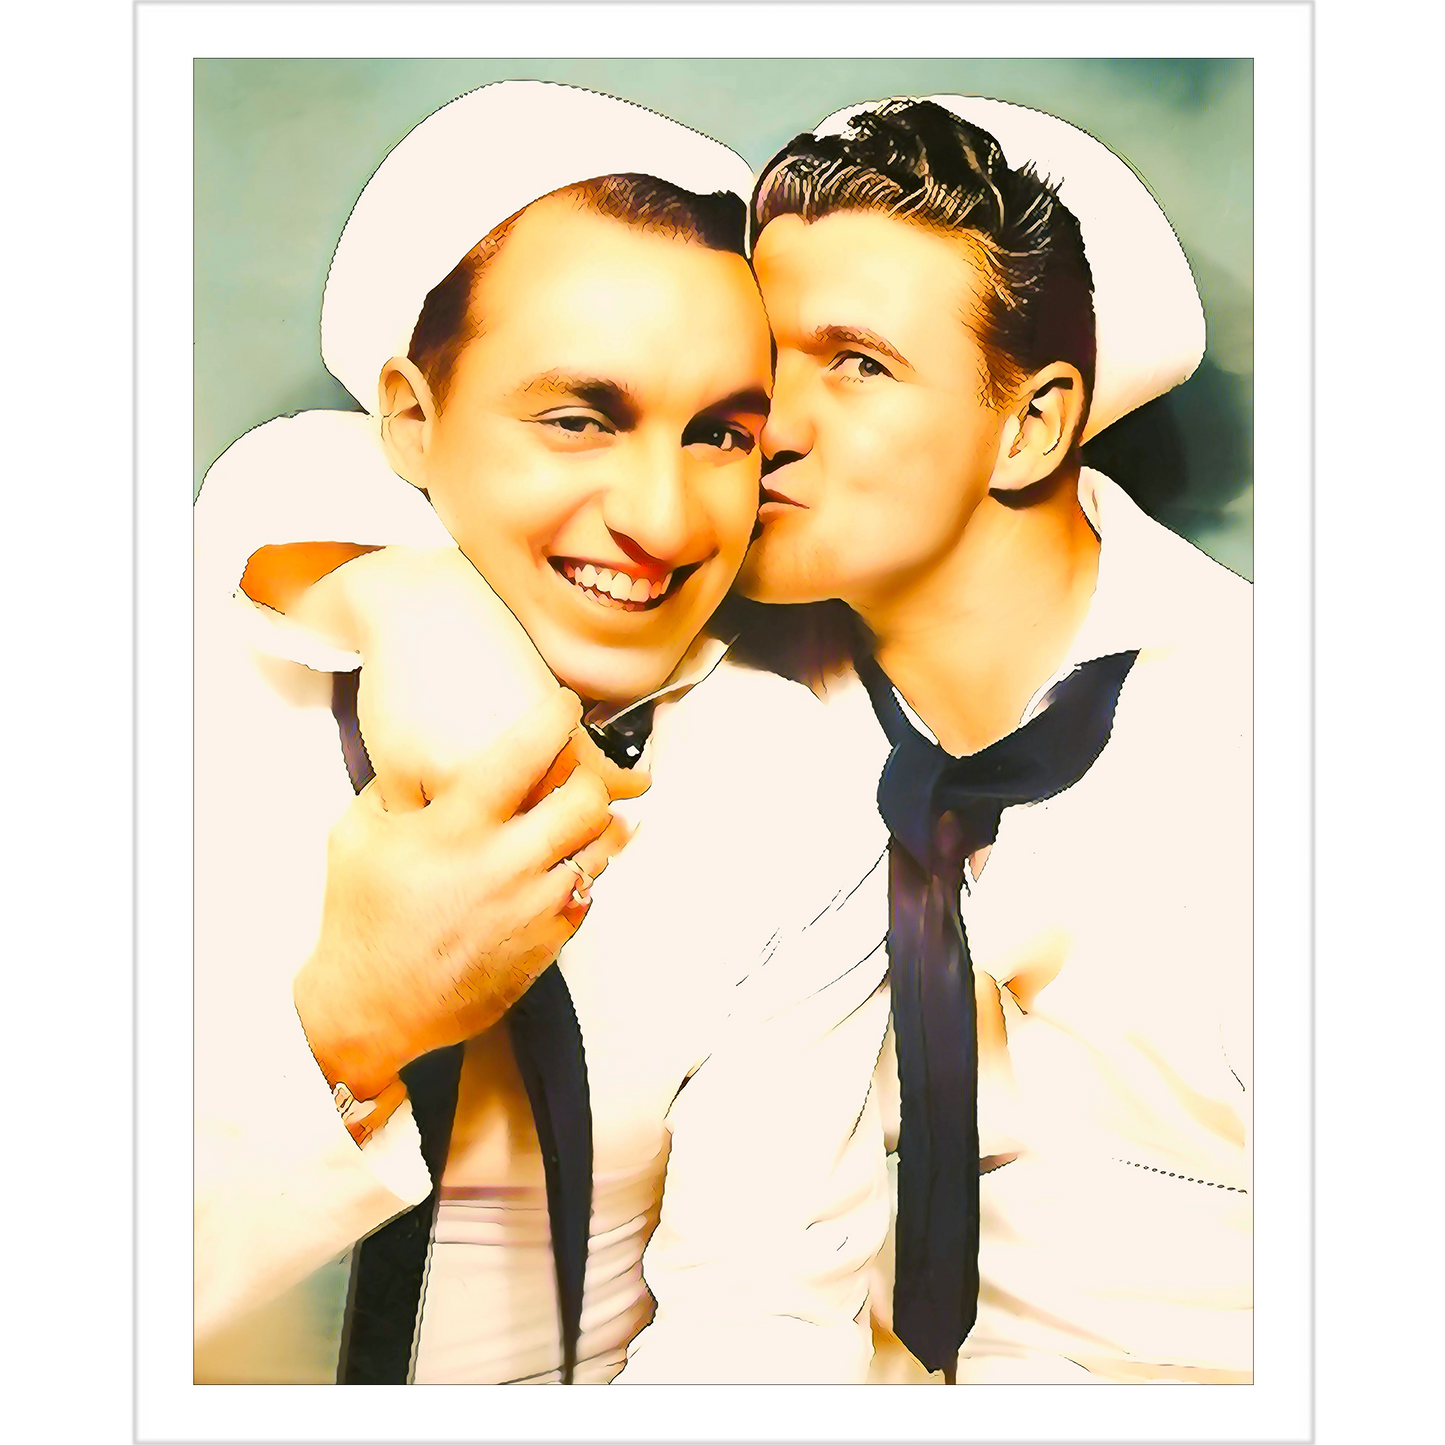 paire 052 | Giclee Artist Print Gay Vintage Affectionate Men Gay Uniform Photobooth GBTQ Navy Sailor